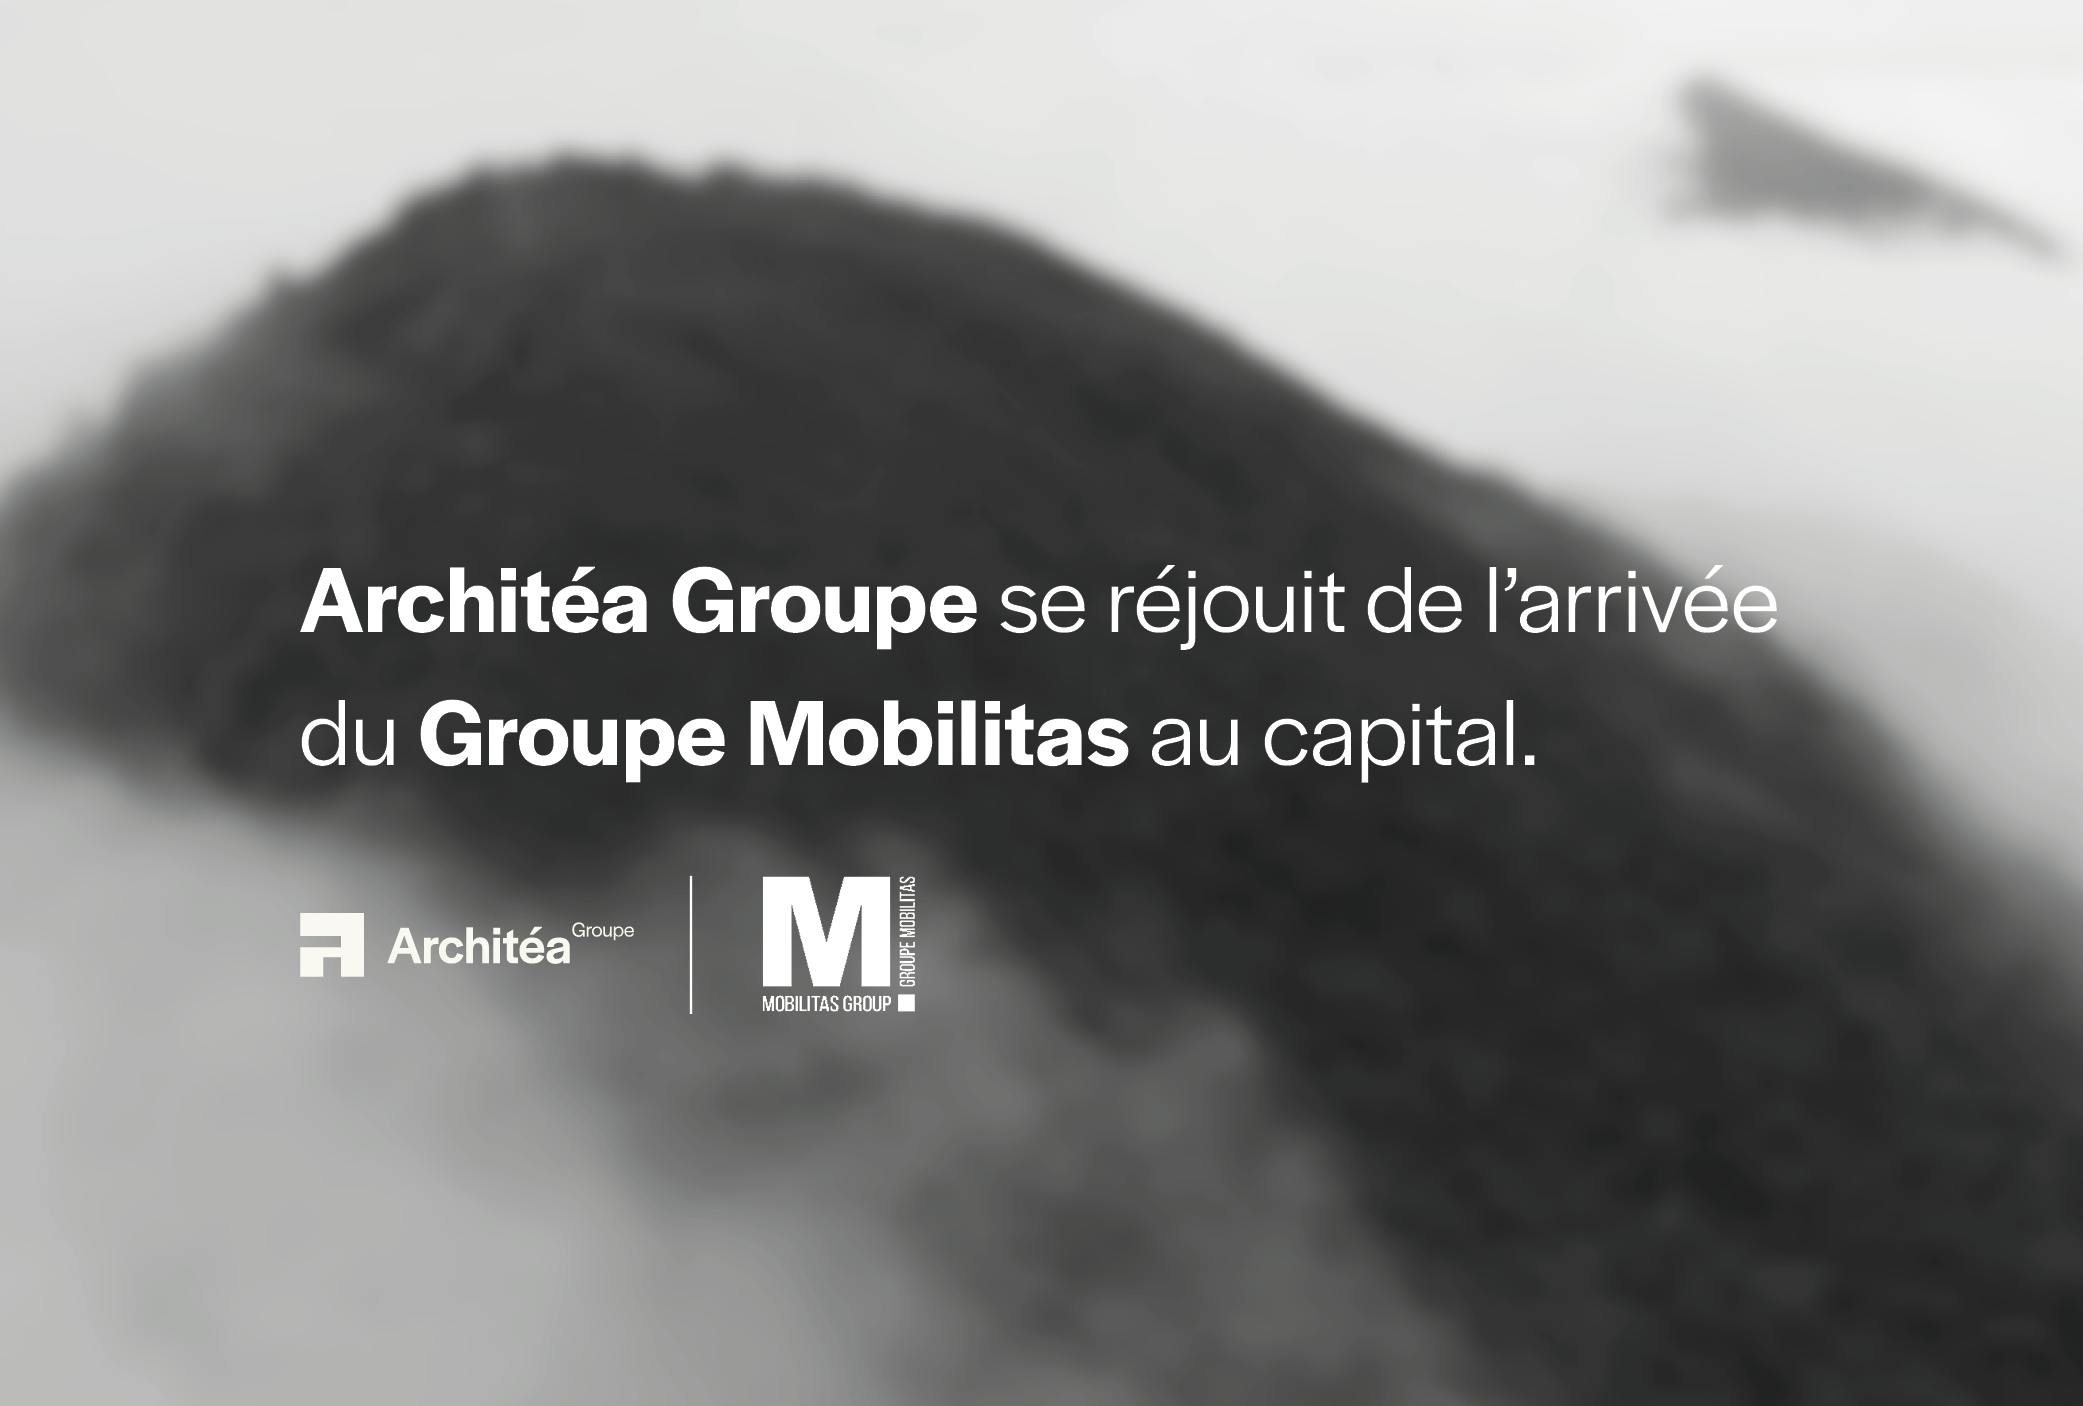 Architéa ouvre son capital au Groupe Mobilitas